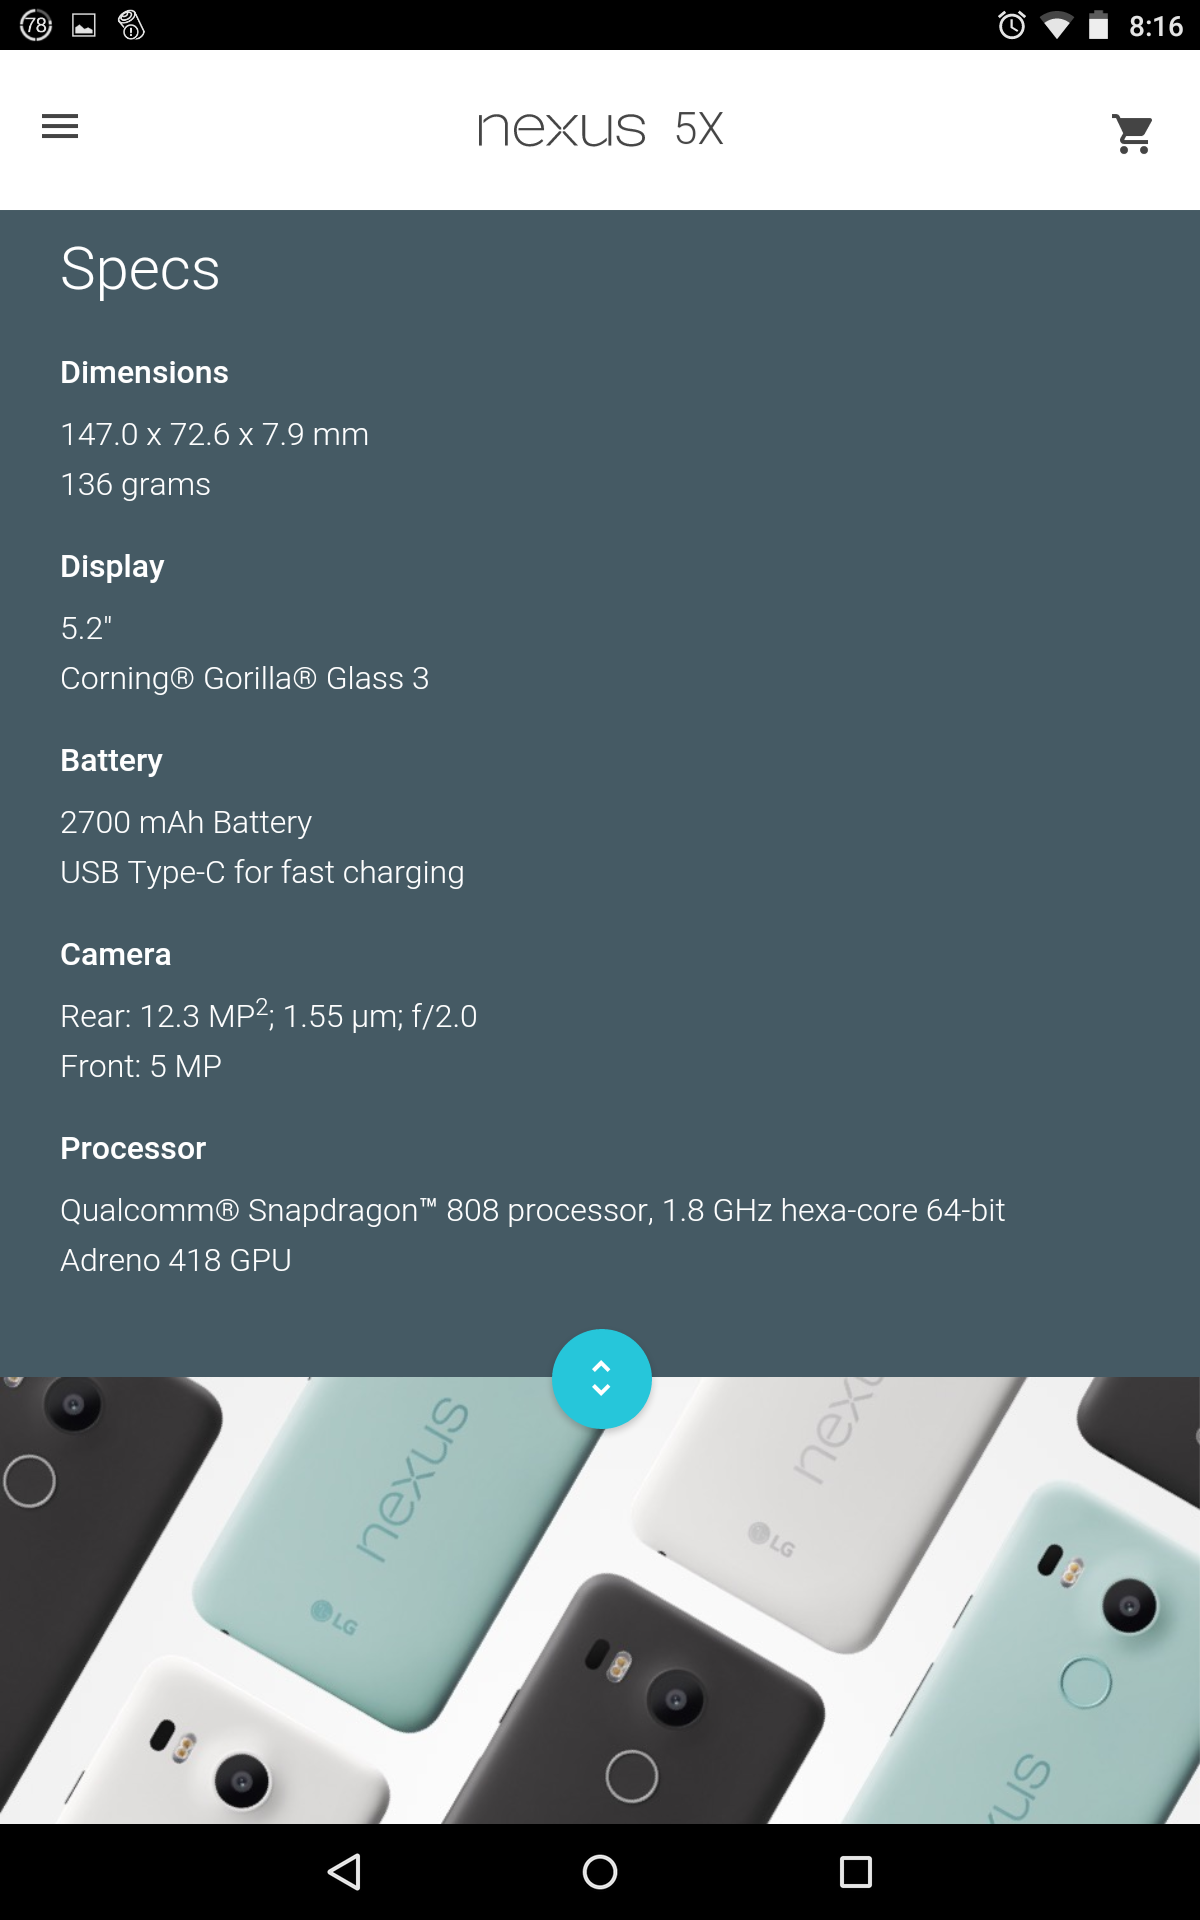 Screenshot_2015-10-12-20-16-18.png 신형 넥서스 5, Nexus 5X 예약판매 중